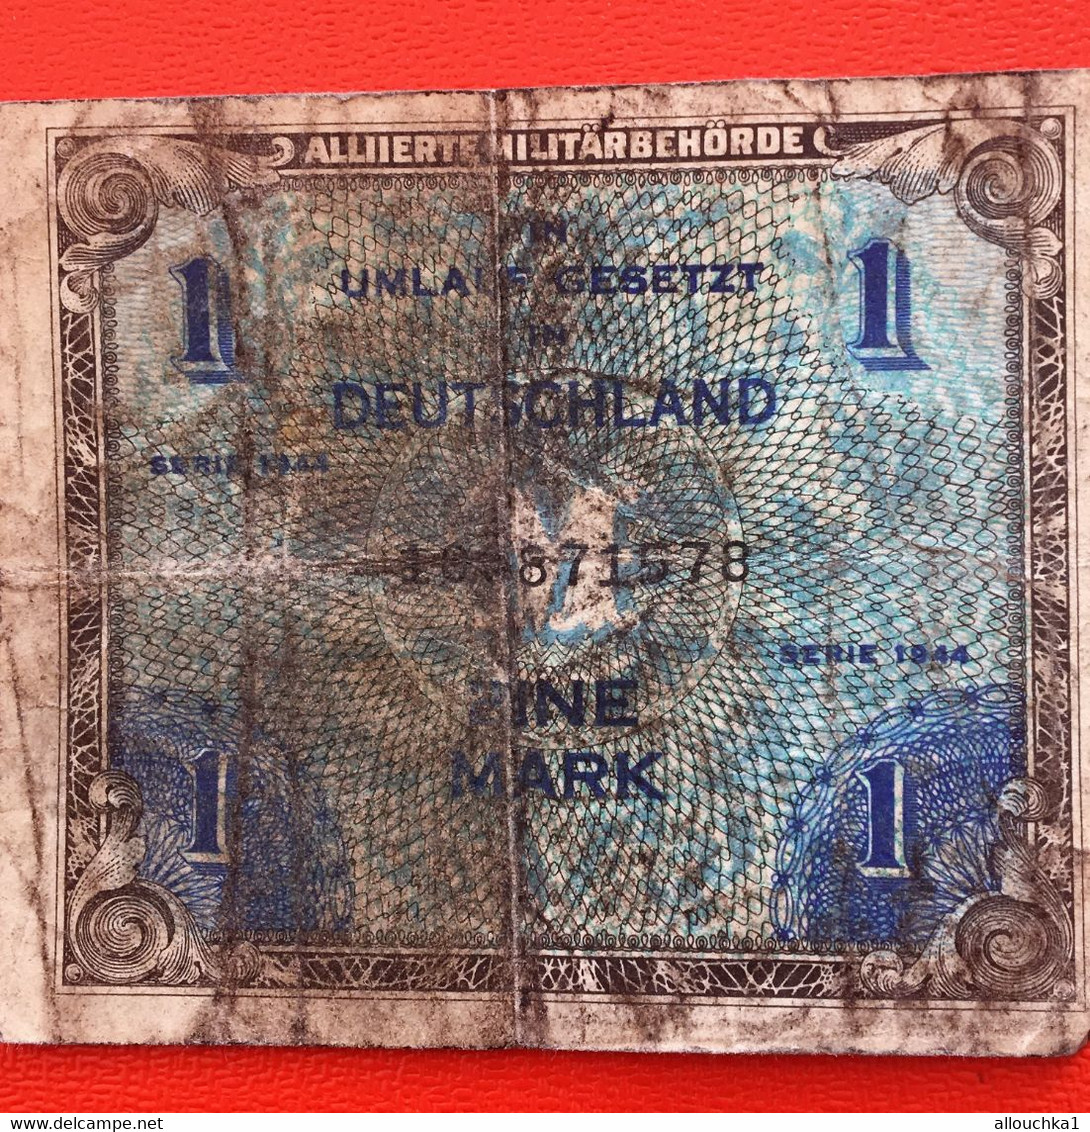 ✔️1 Eine Mark - Allied Occupation WWII - Billet De Banque ALLEMAGNE-Série 1944-☛1944-1949 : Occupation Des Alliés-☛état - 1 Mark